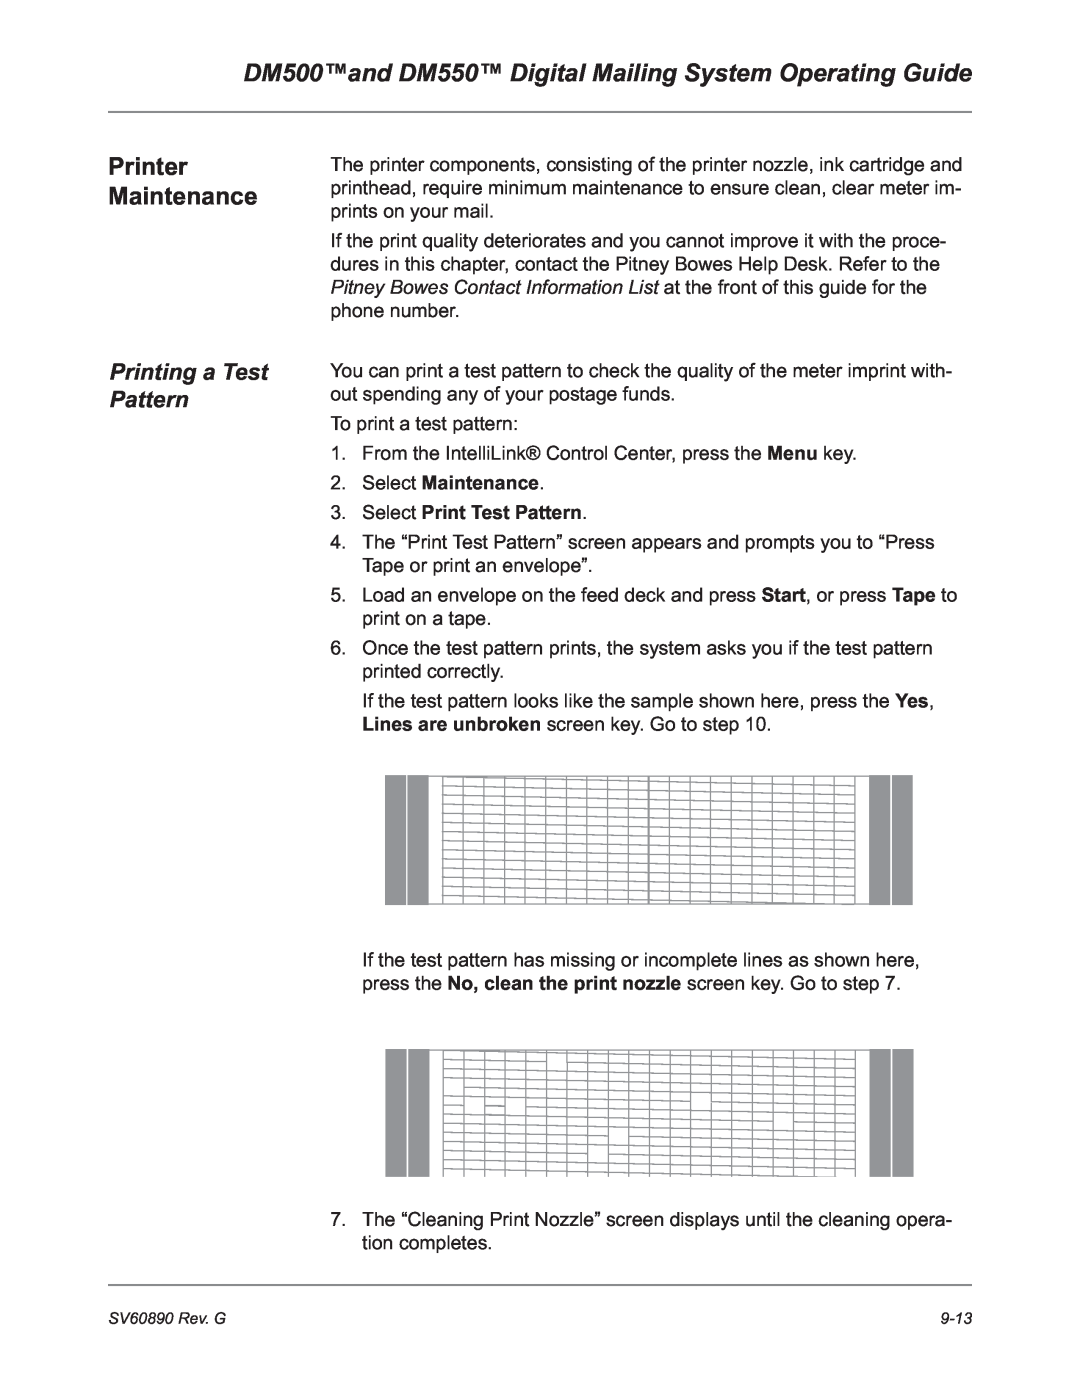 Pitney Bowes DM500, DM550 Printer Maintenance, Printing a Test Pattern, Select Maintenance 3. Select Print Test Pattern 